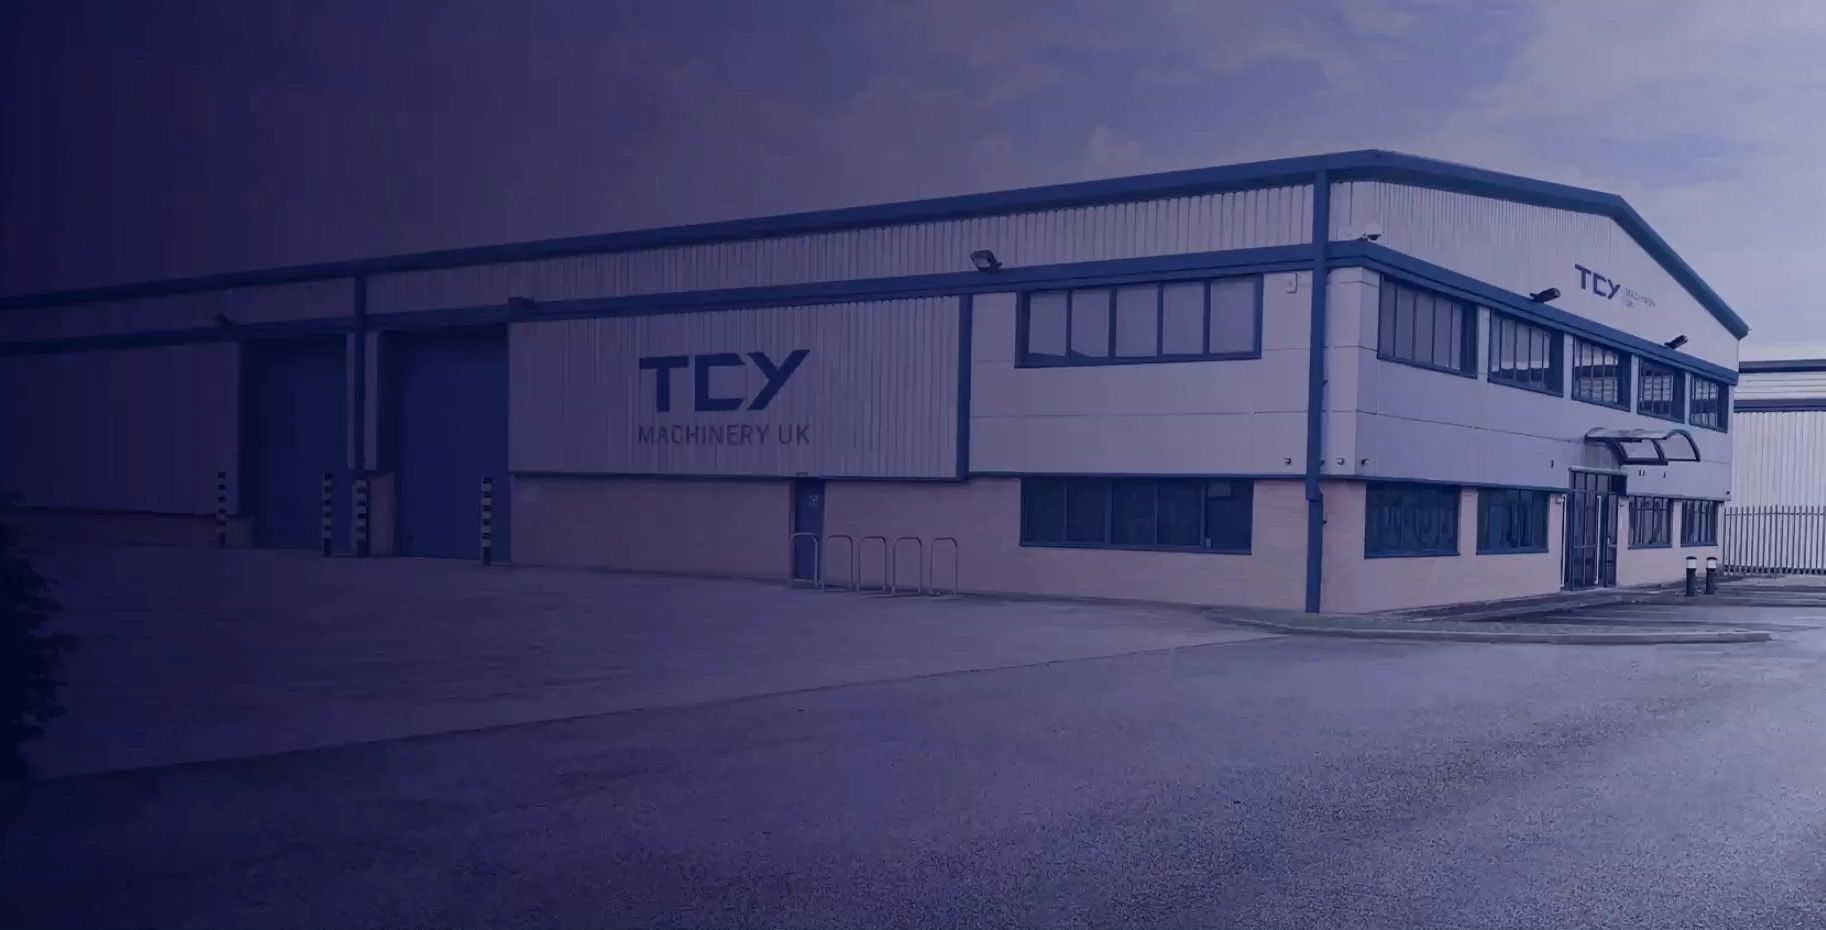 TCY Machinery UK Leeds